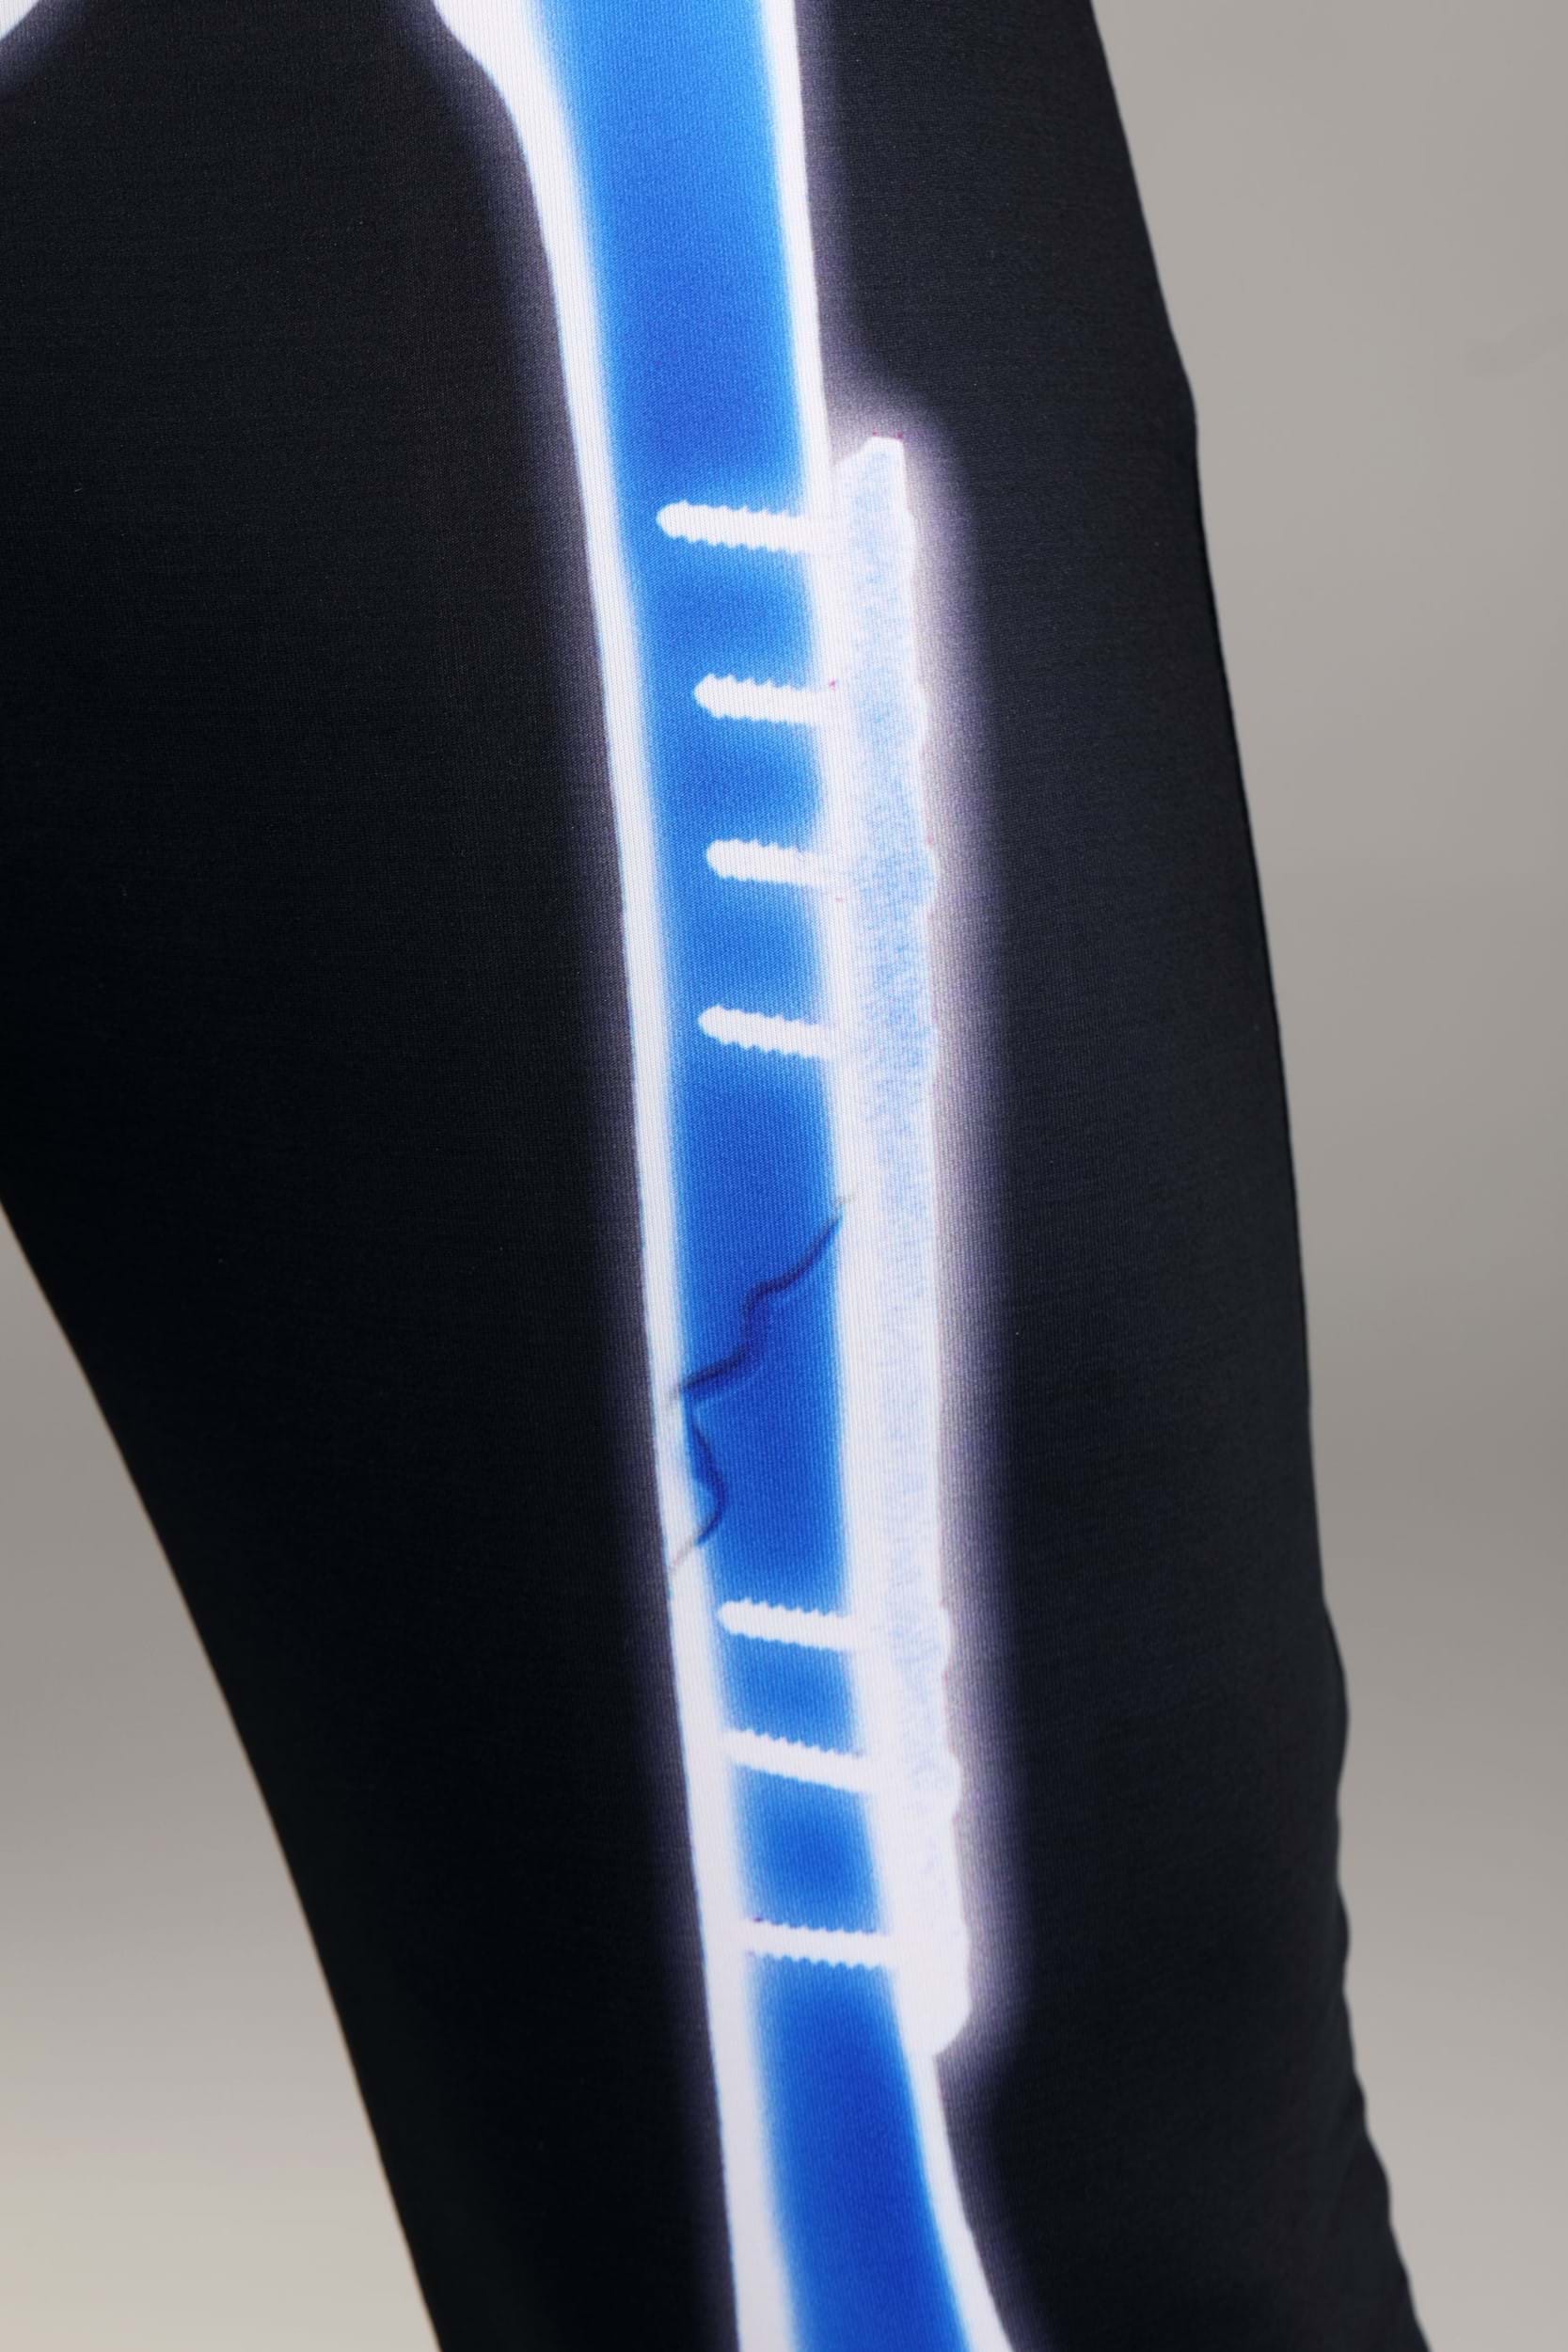 X-Ray Skeleton Women's Jumpsuit Costume